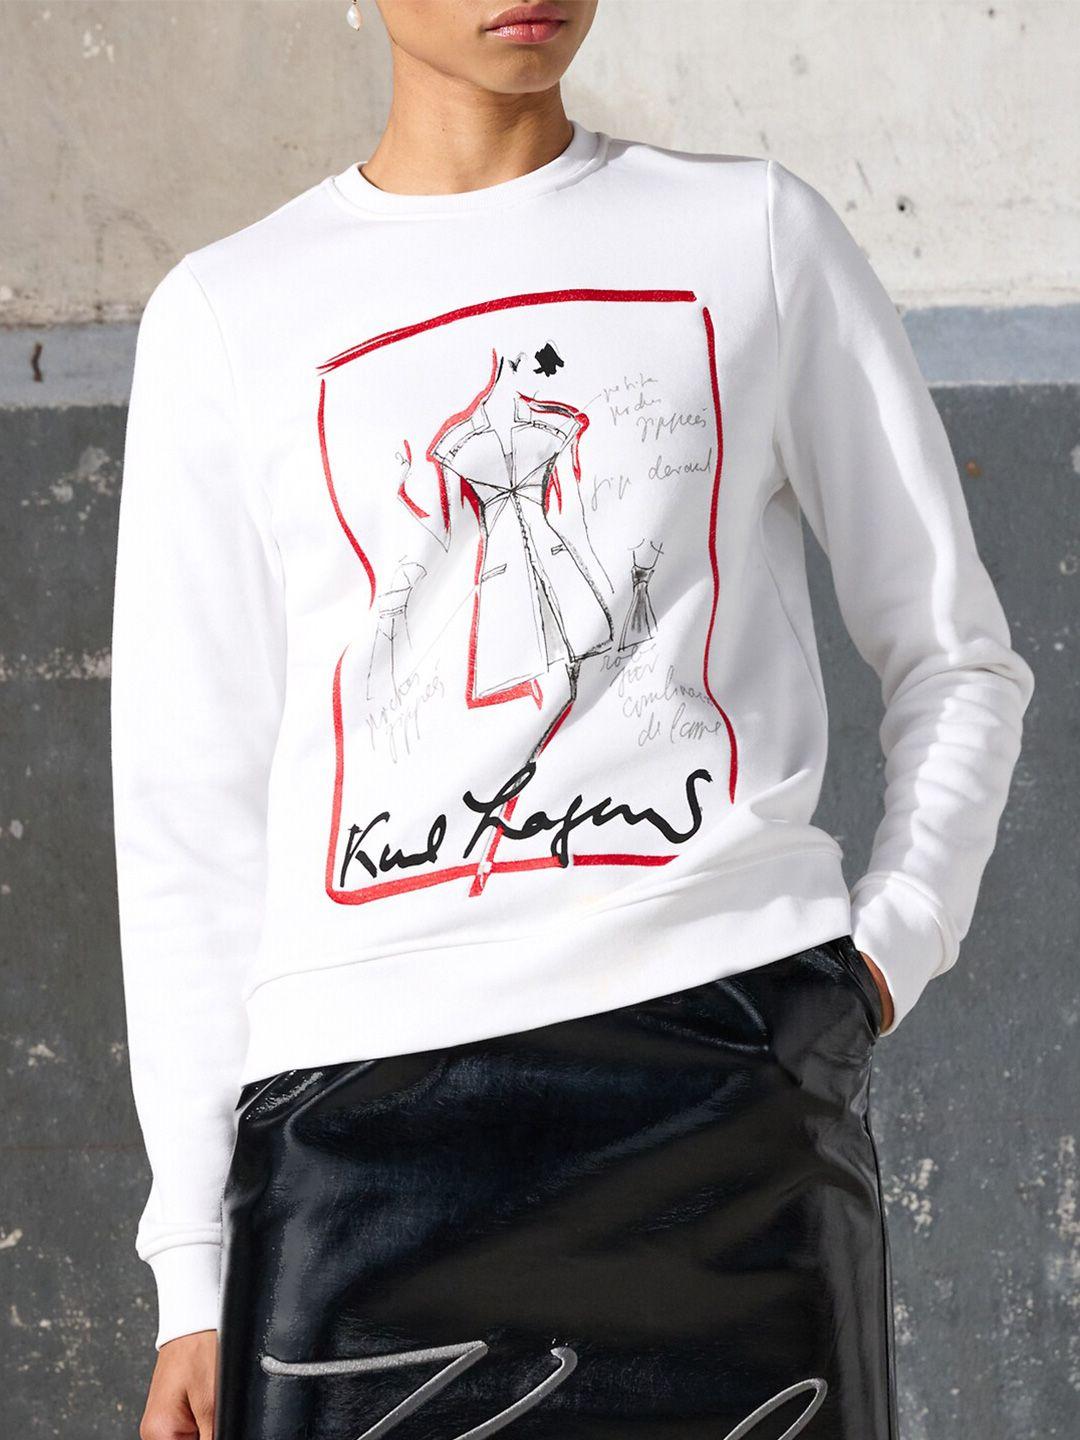 karl lagerfeld graphic printed pullover cotton sweatshirt